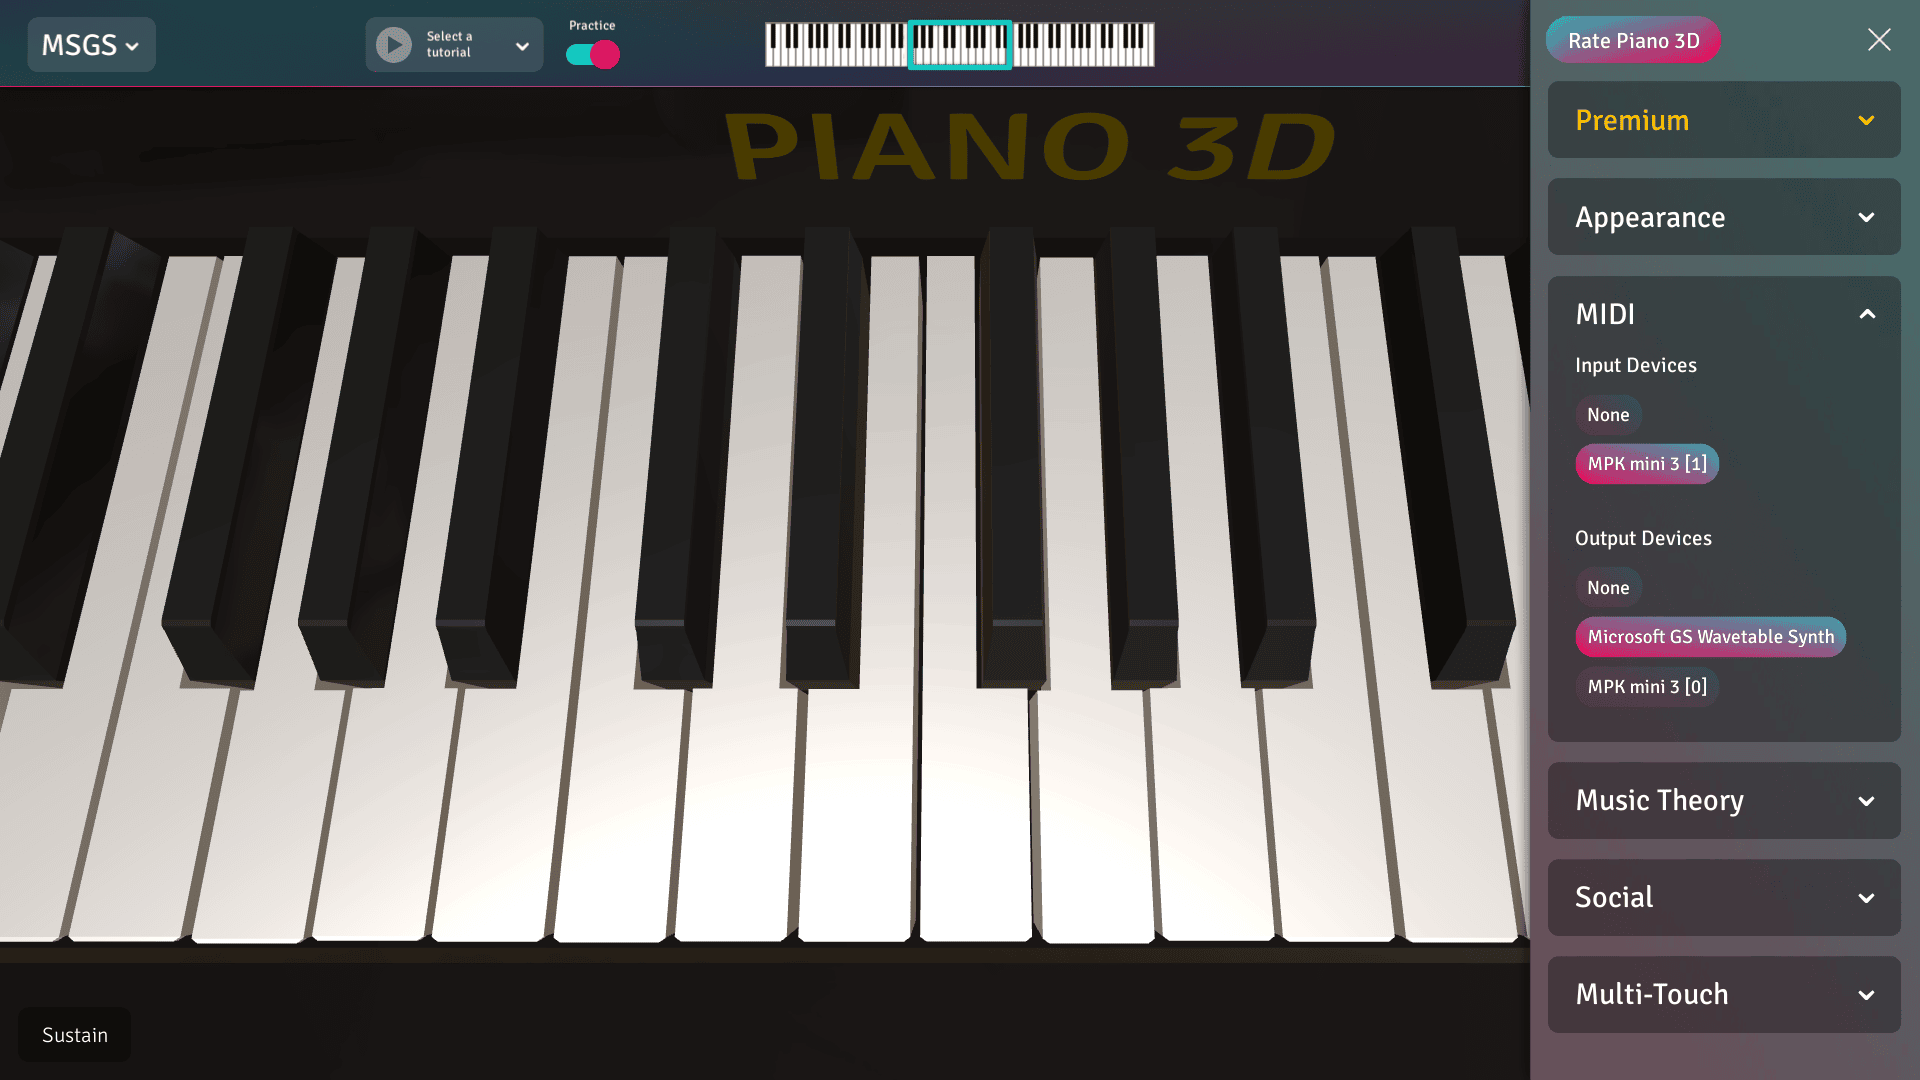 midi menu in Piano 3D allows to select midi in and midi out devices